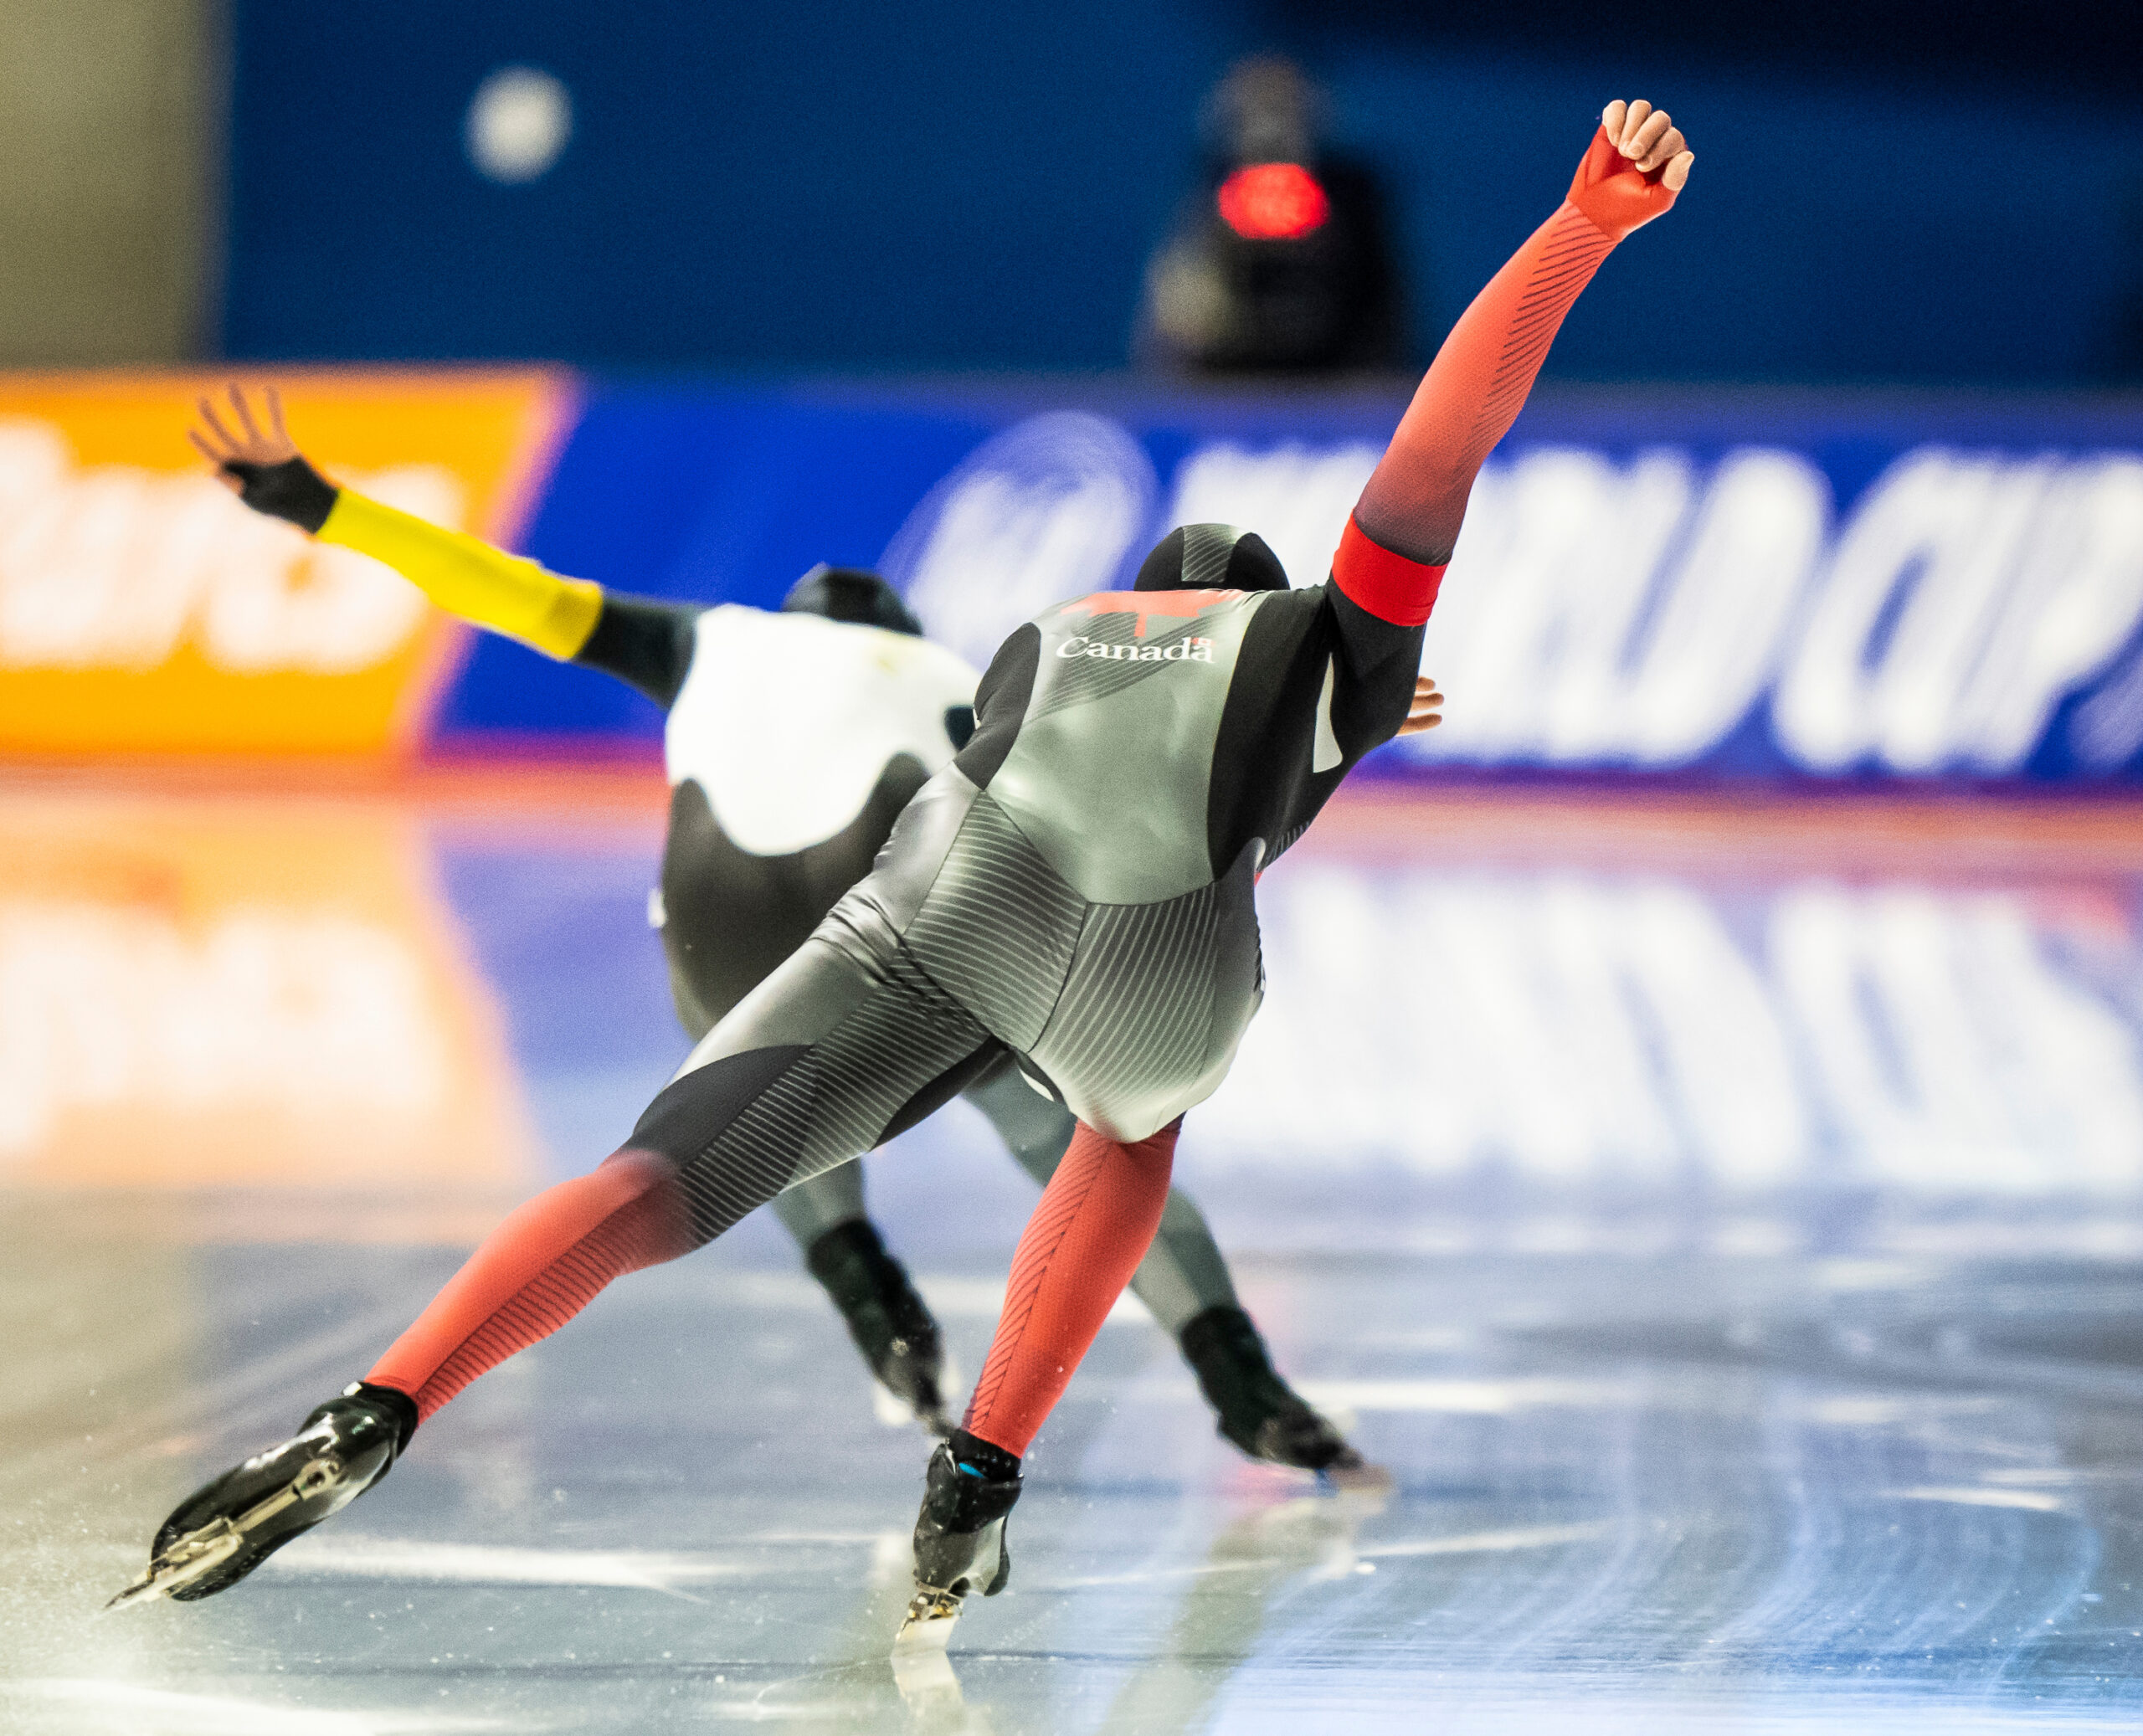 2022-23-isu-world-cup-speed-skating-5-speed-skating-canada